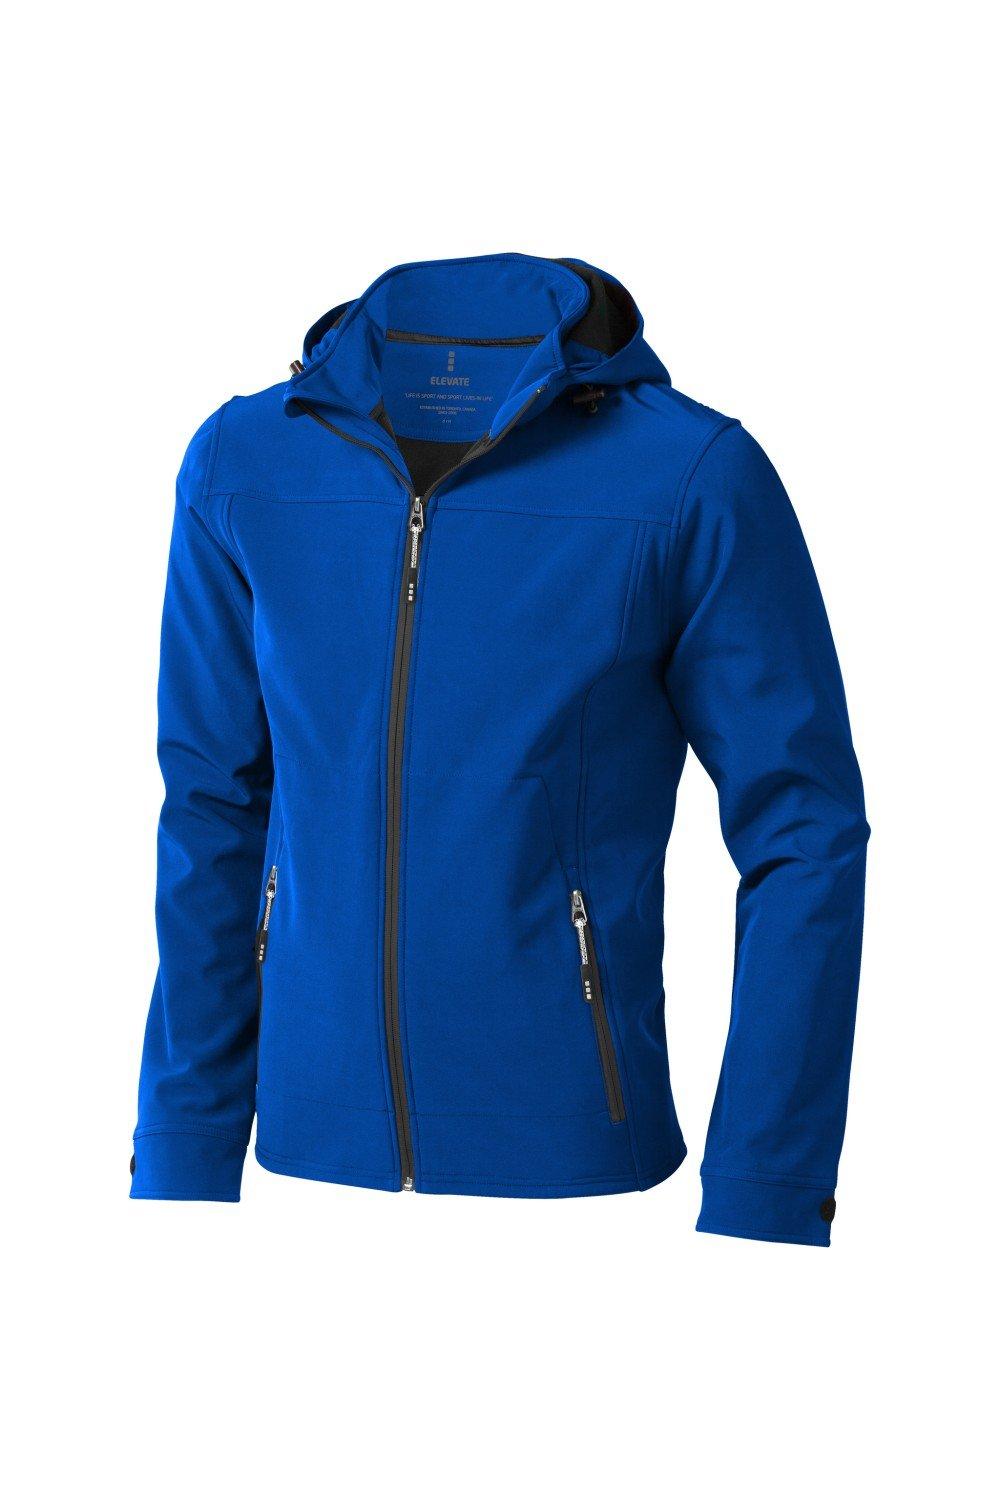 Куртка Langley Softshell Elevate, синий куртка langley softshell elevate синий